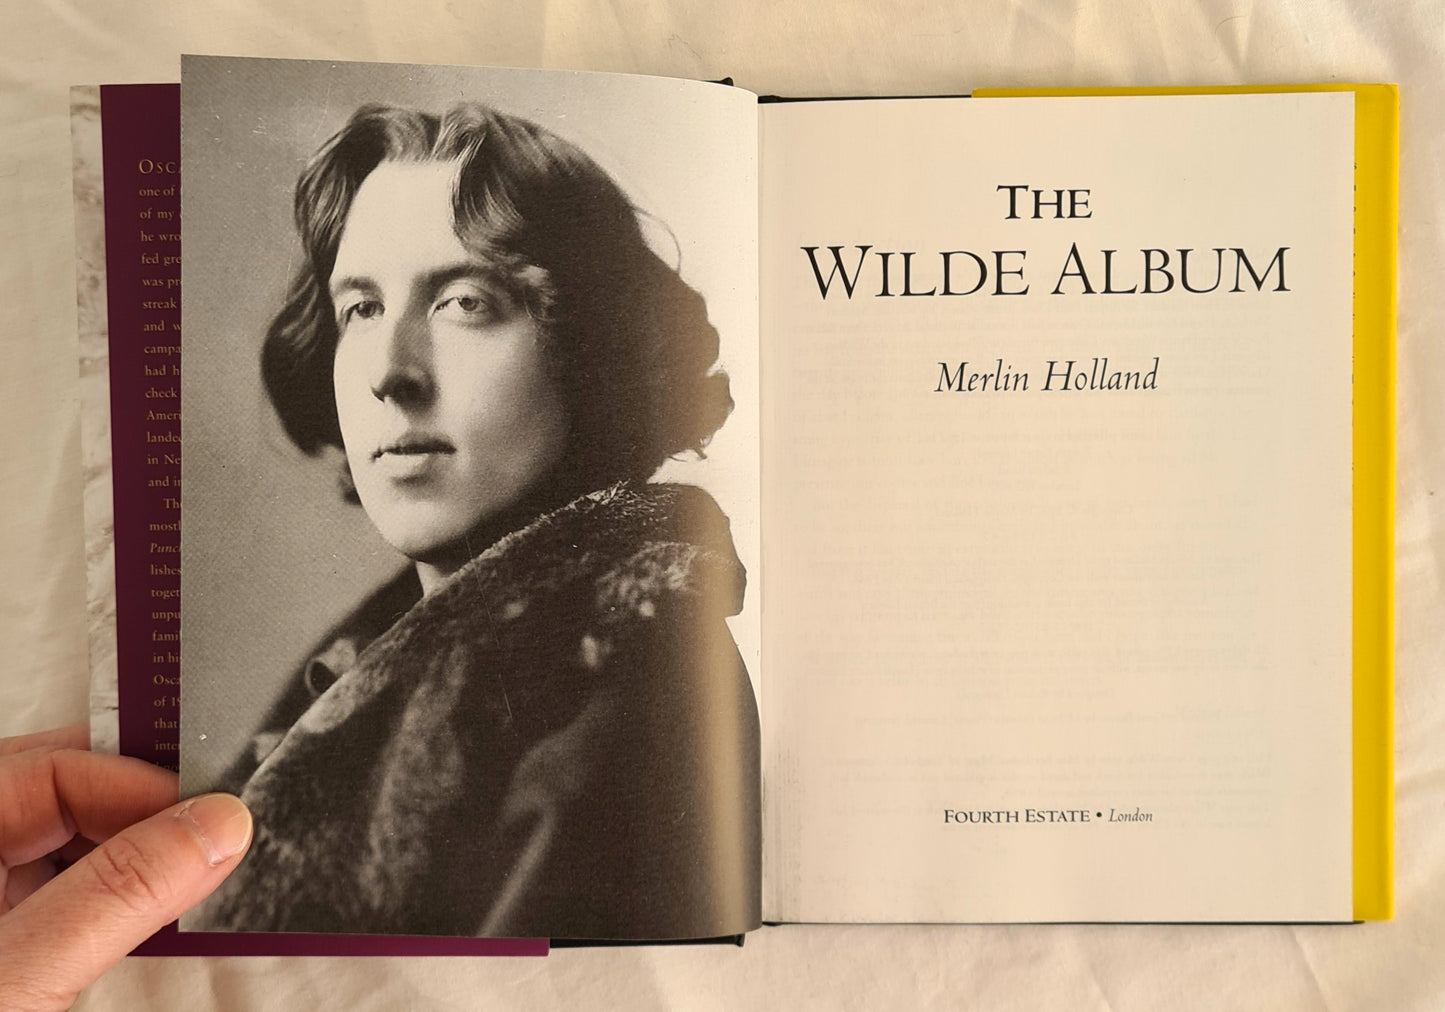 The Wilde Album by Merlin Holland